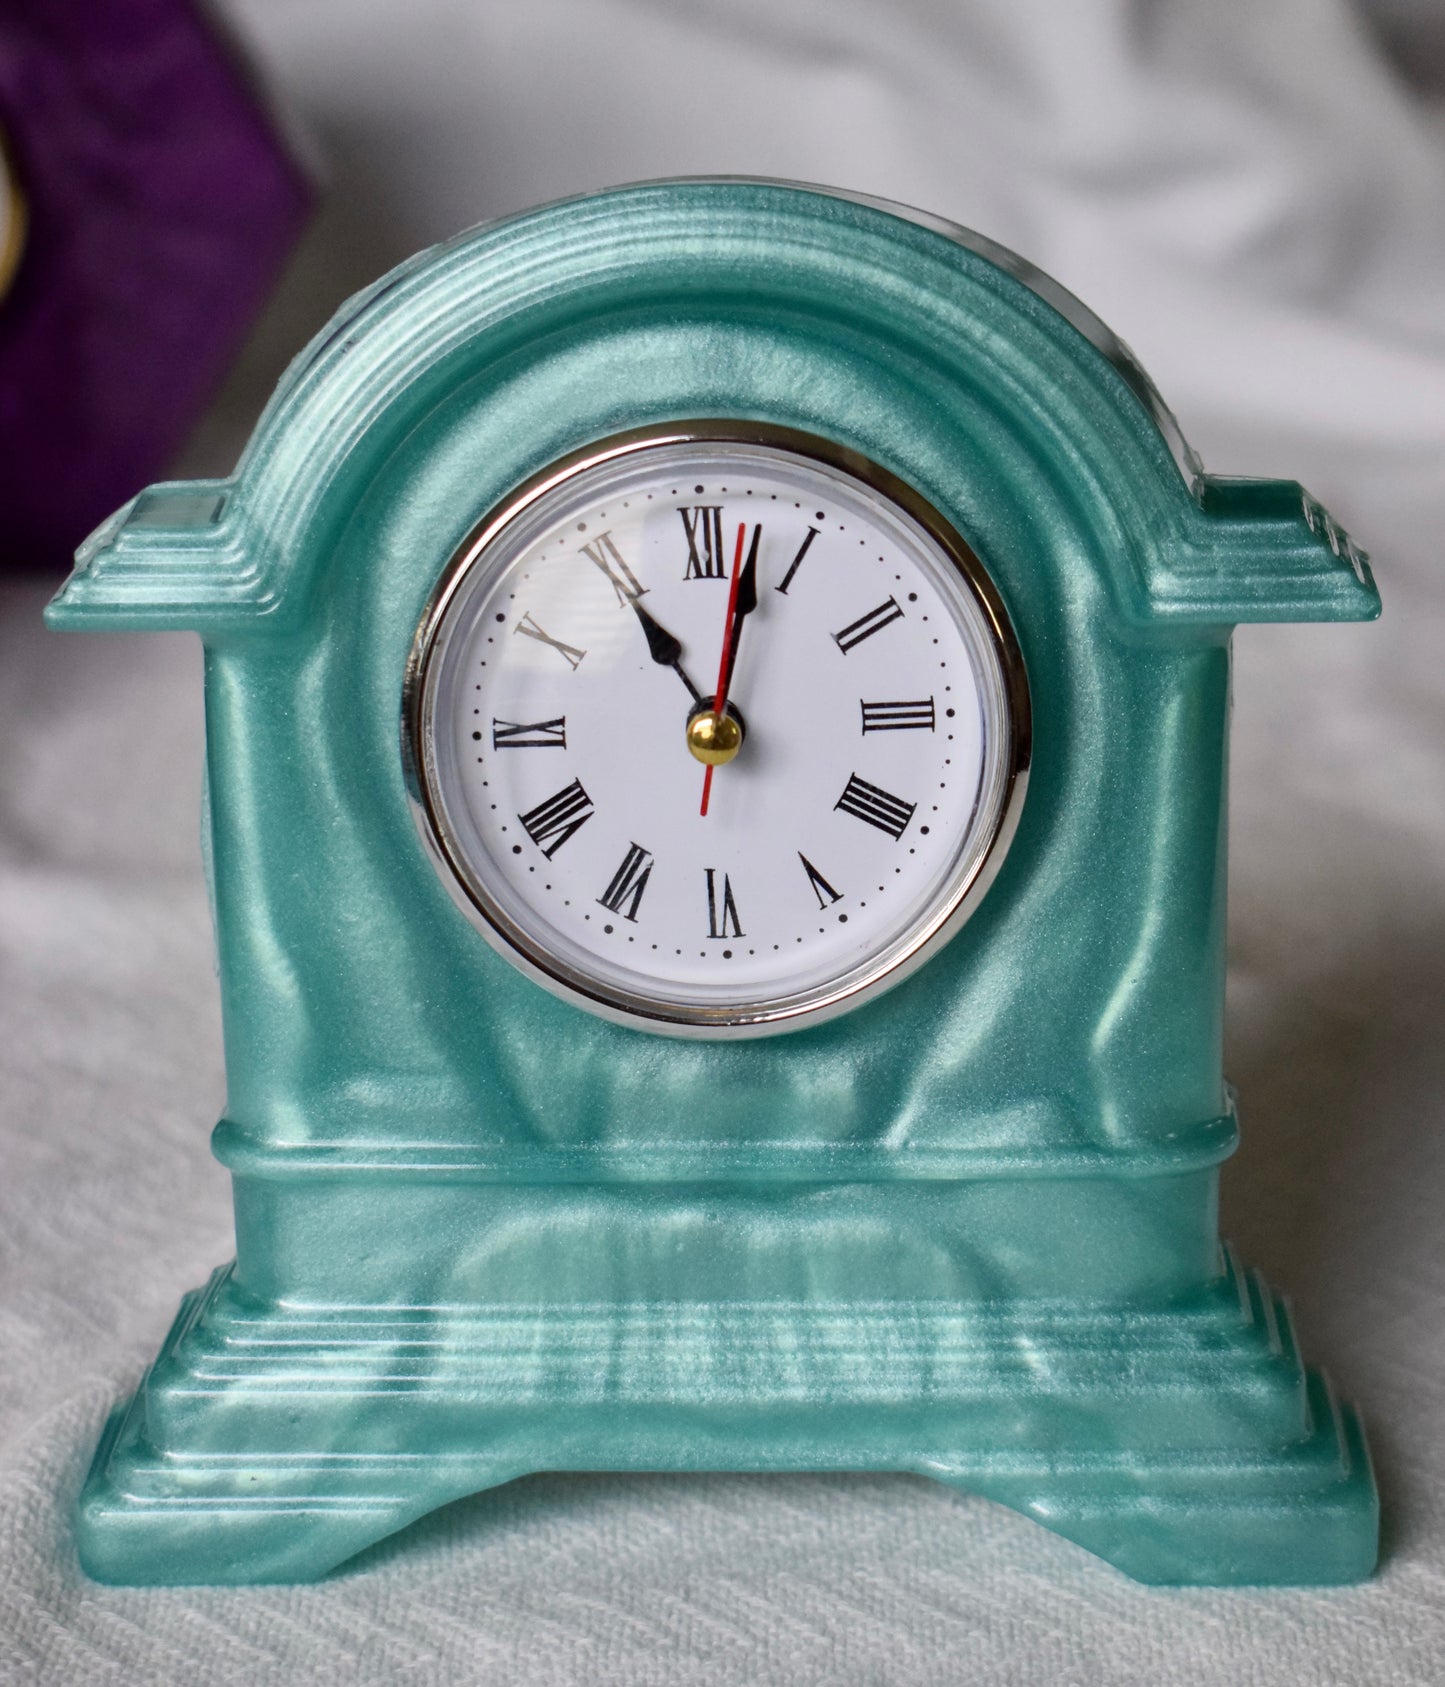 Small resin Mantle or Desktop Clocks